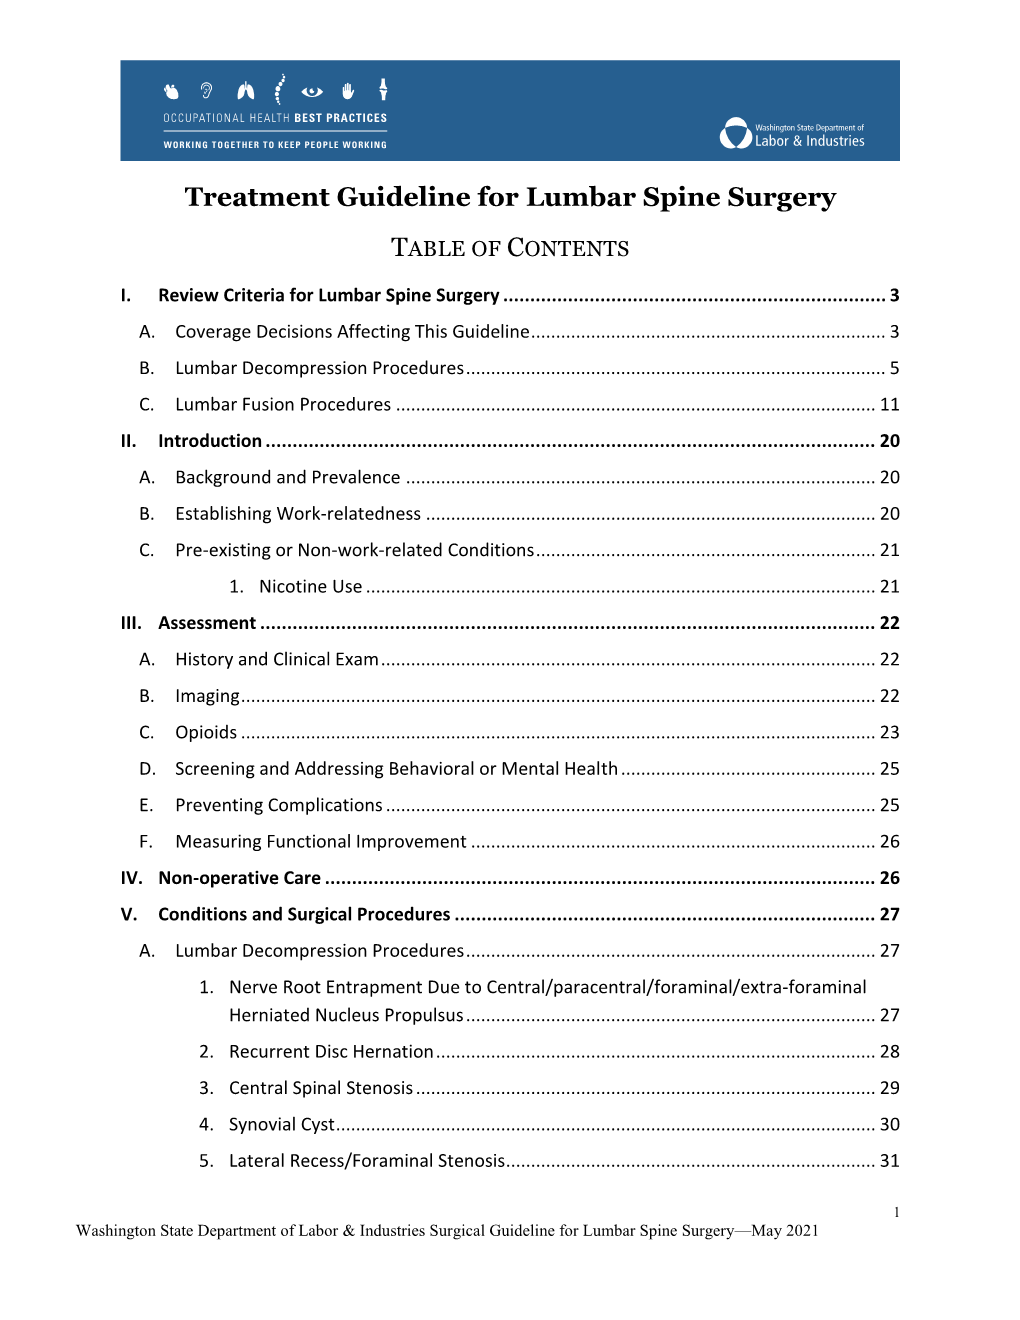 Lumbar Spine Surgery Guideline